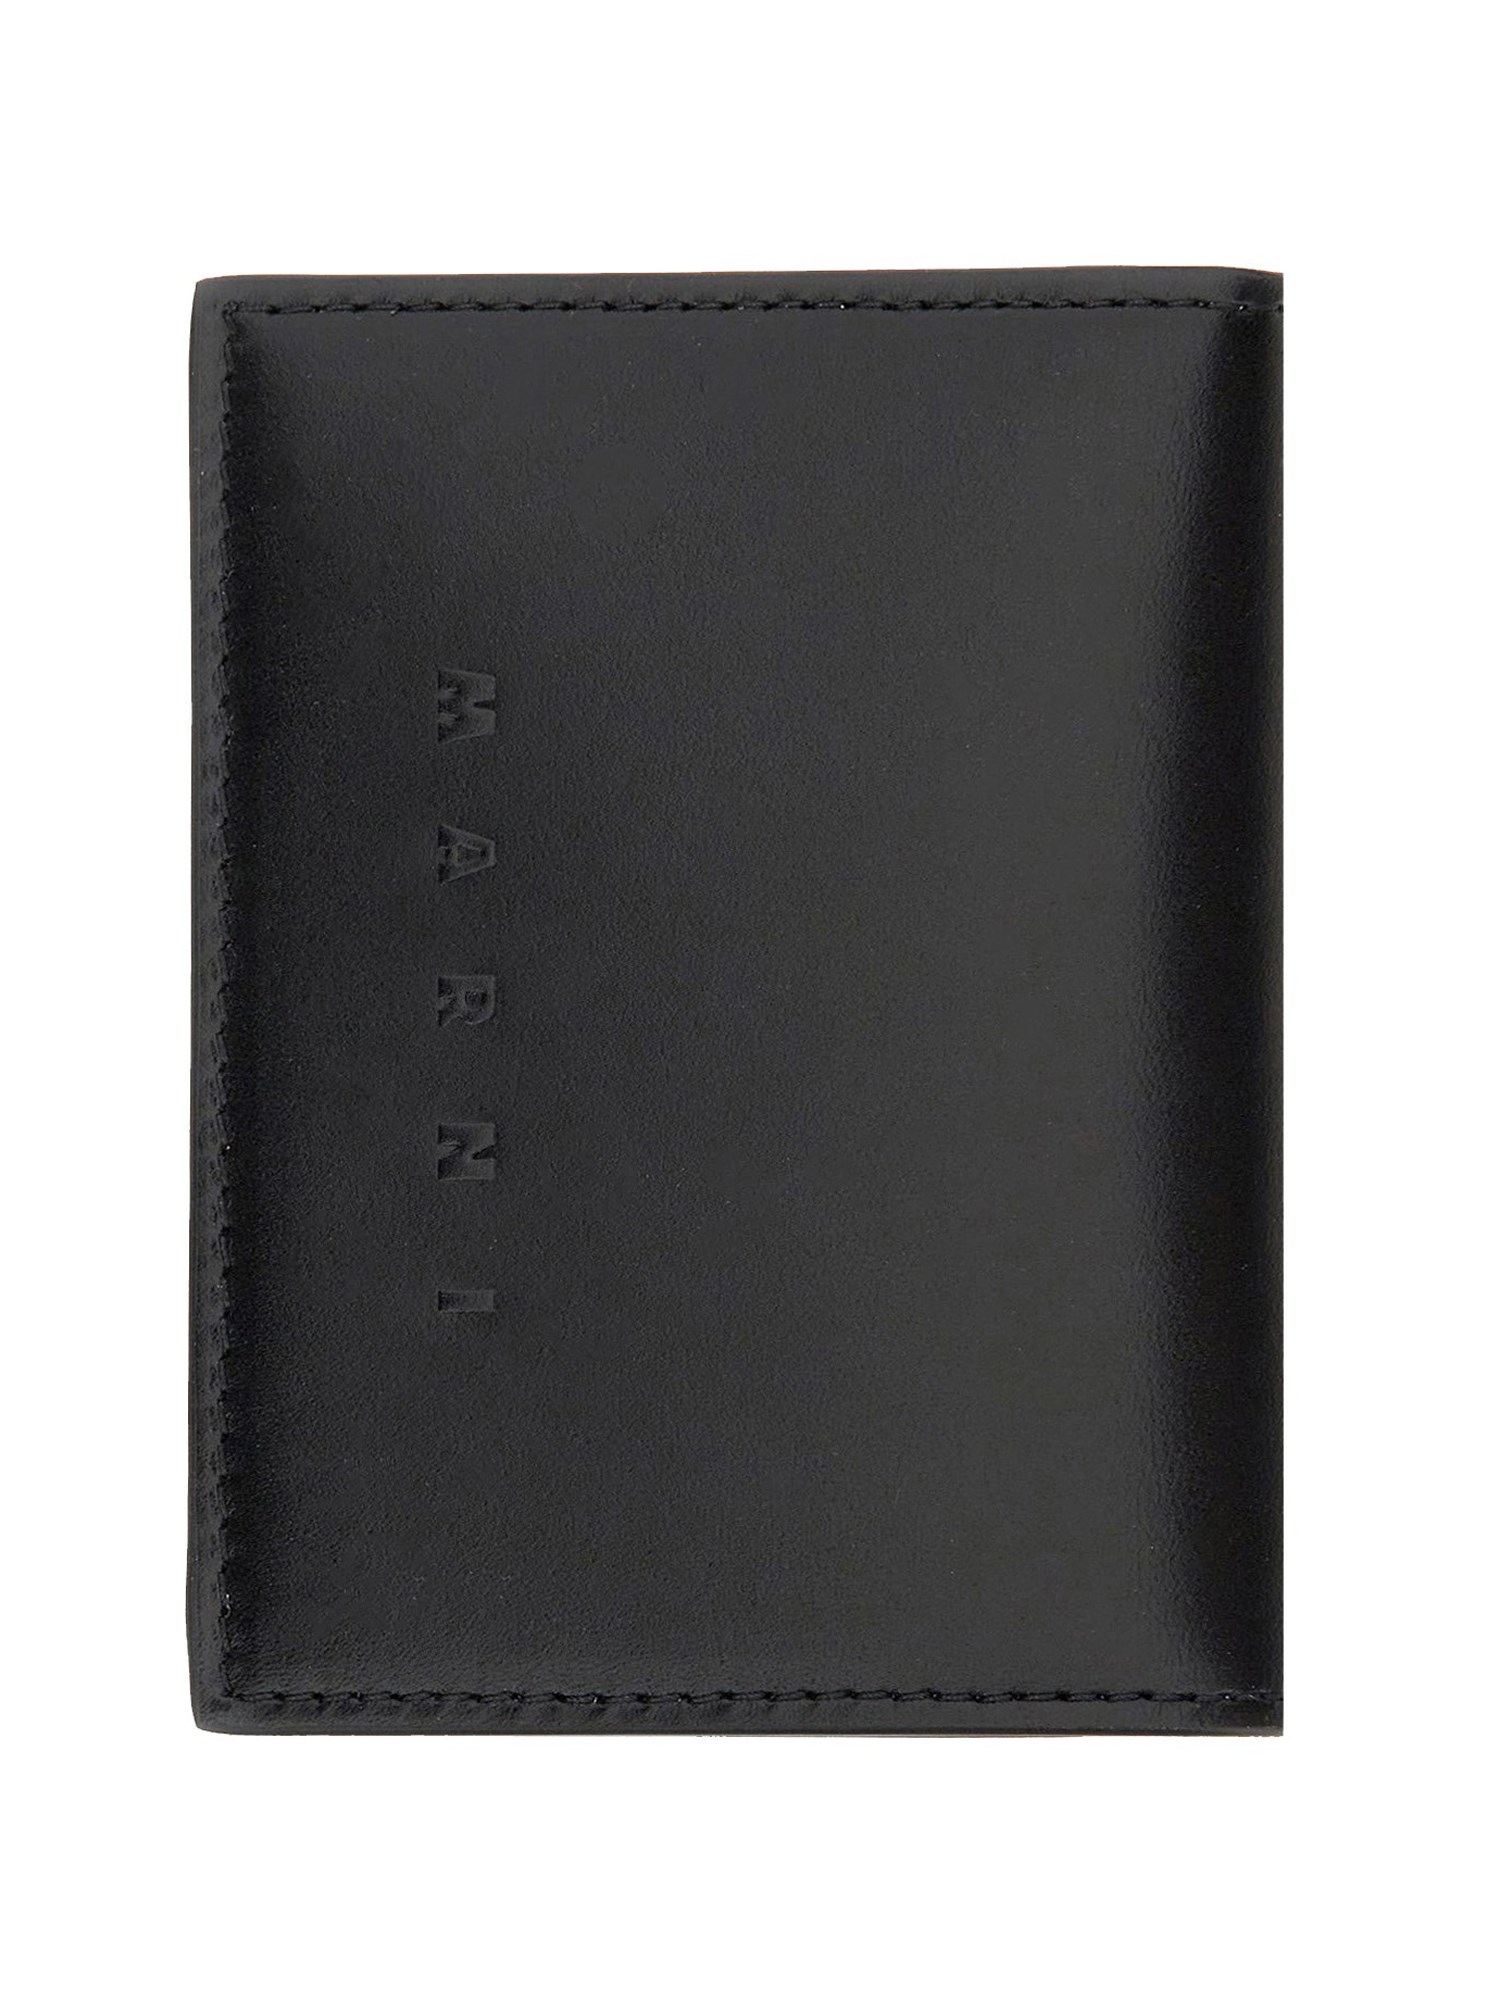 Marni marni bi-fold leather wallet